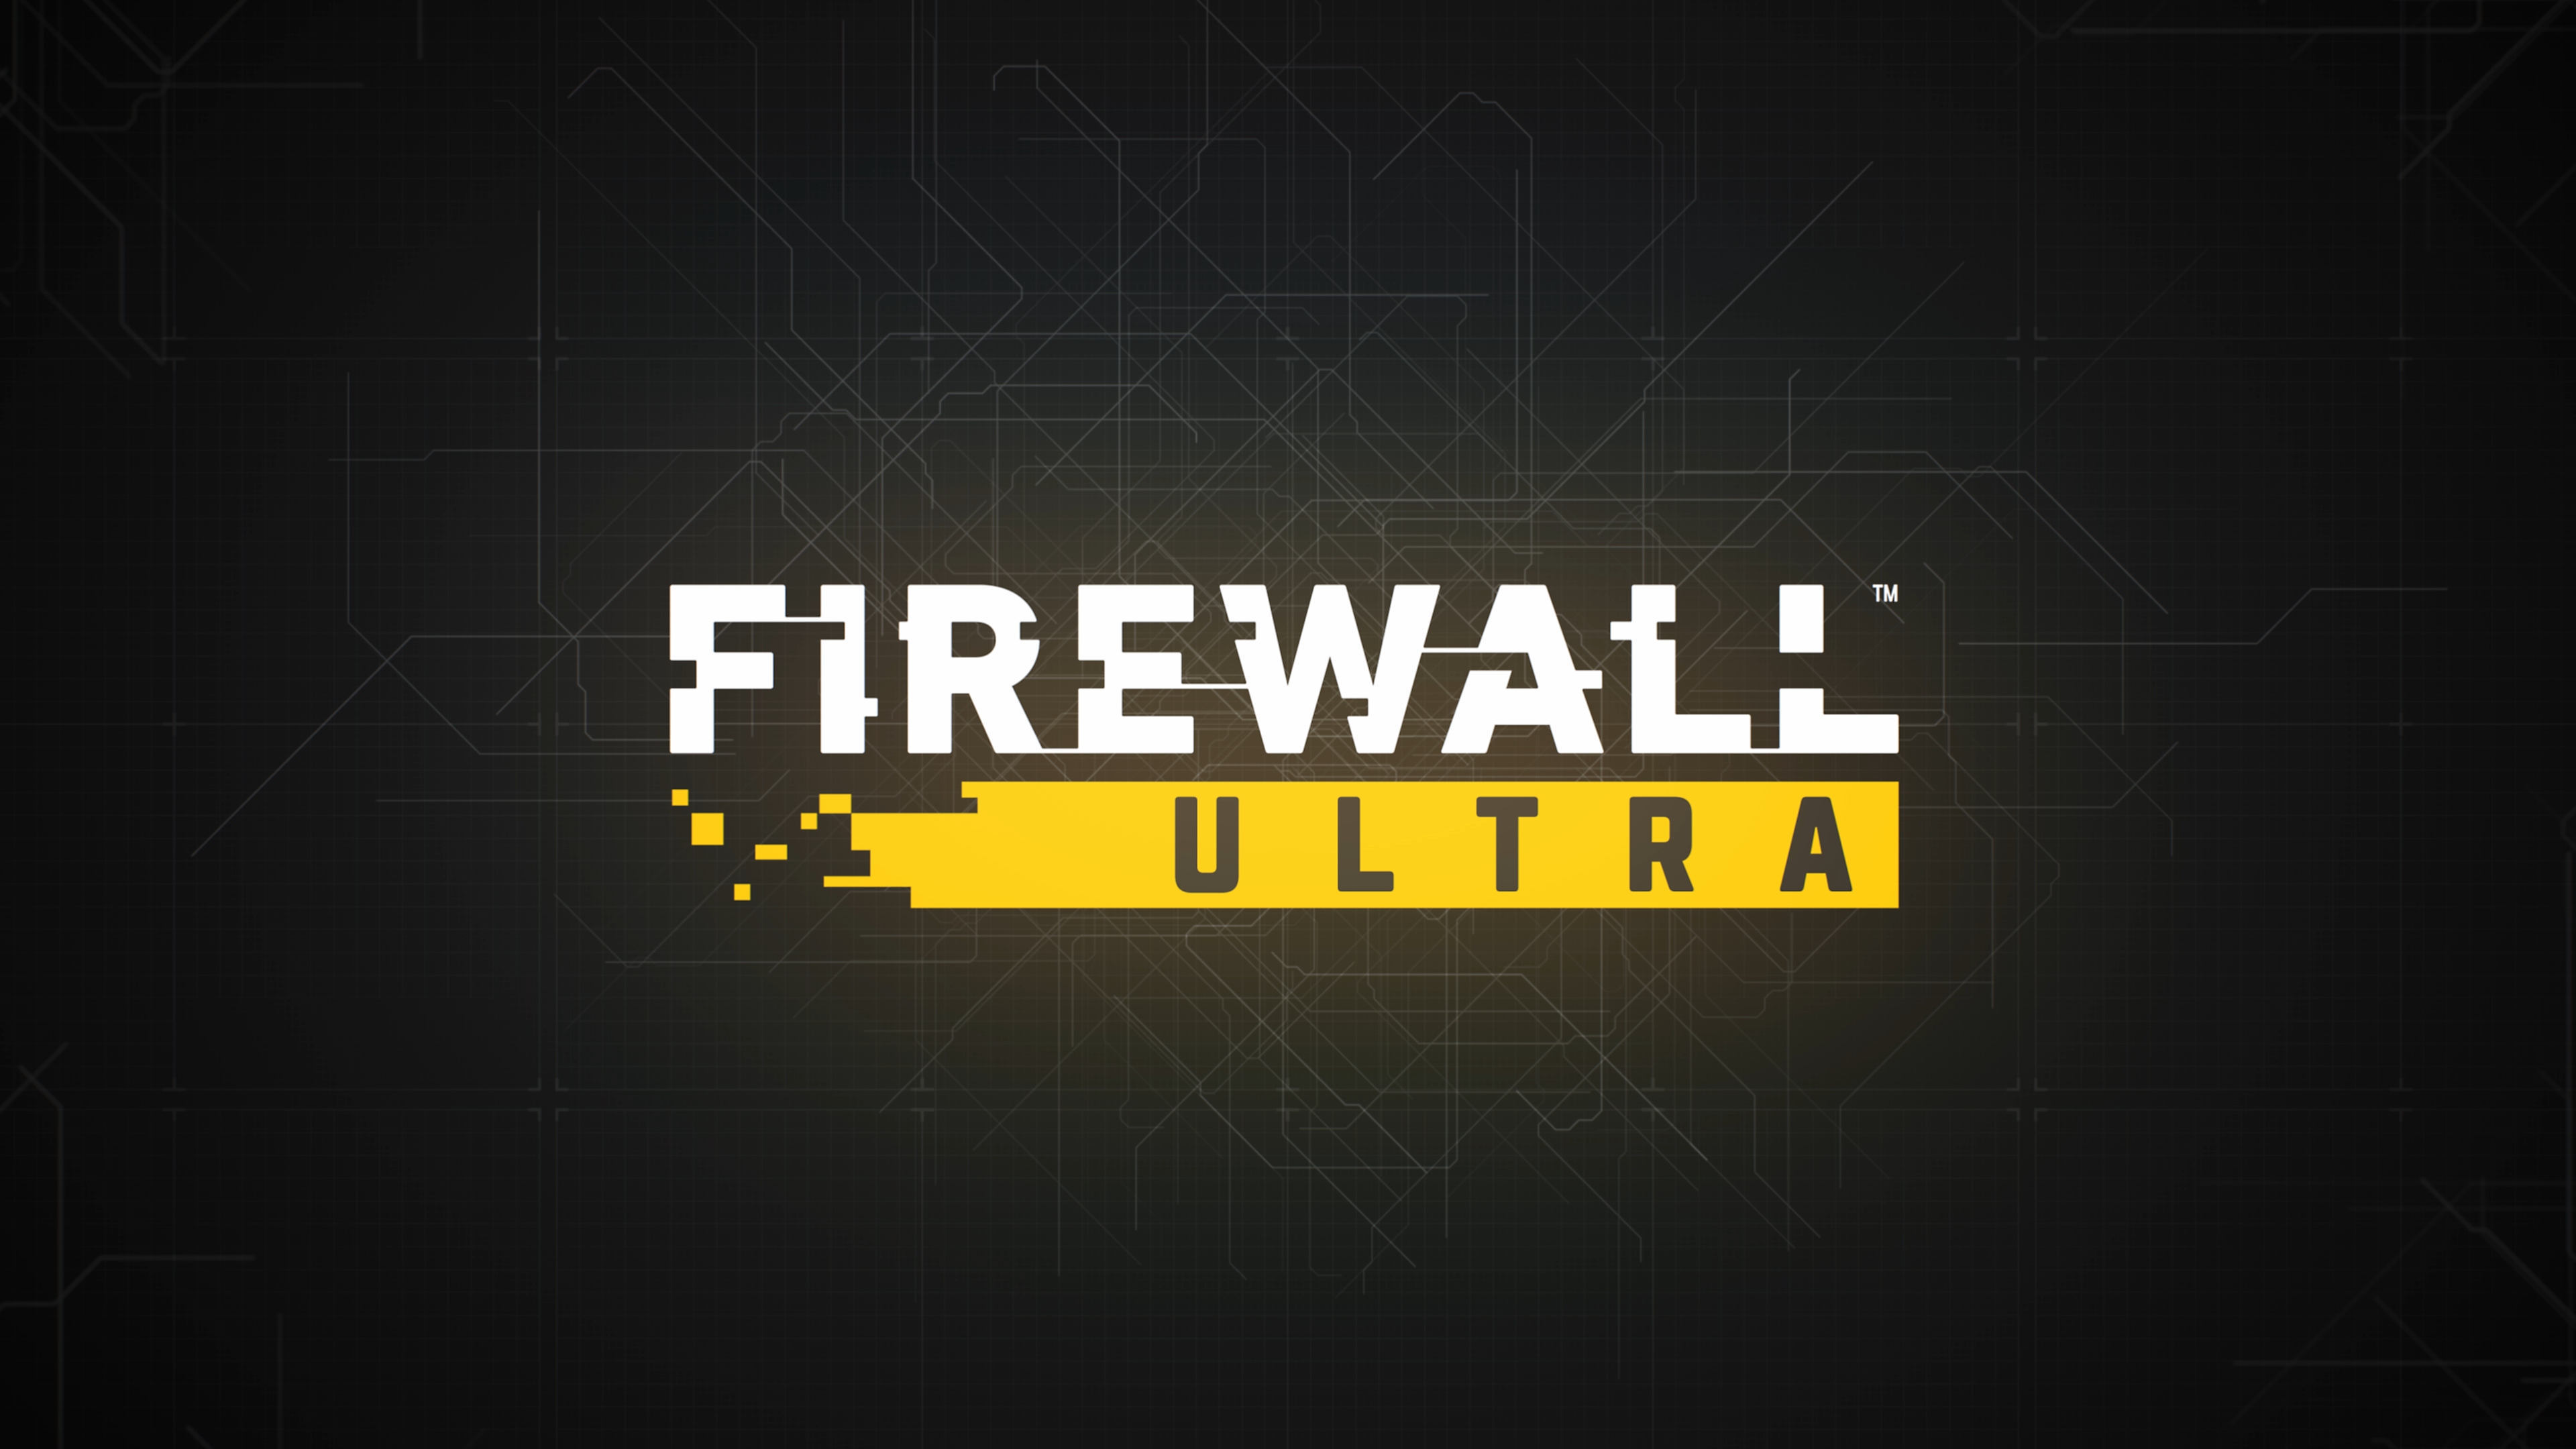 Firewall Ultra スクリーンショット キーアート